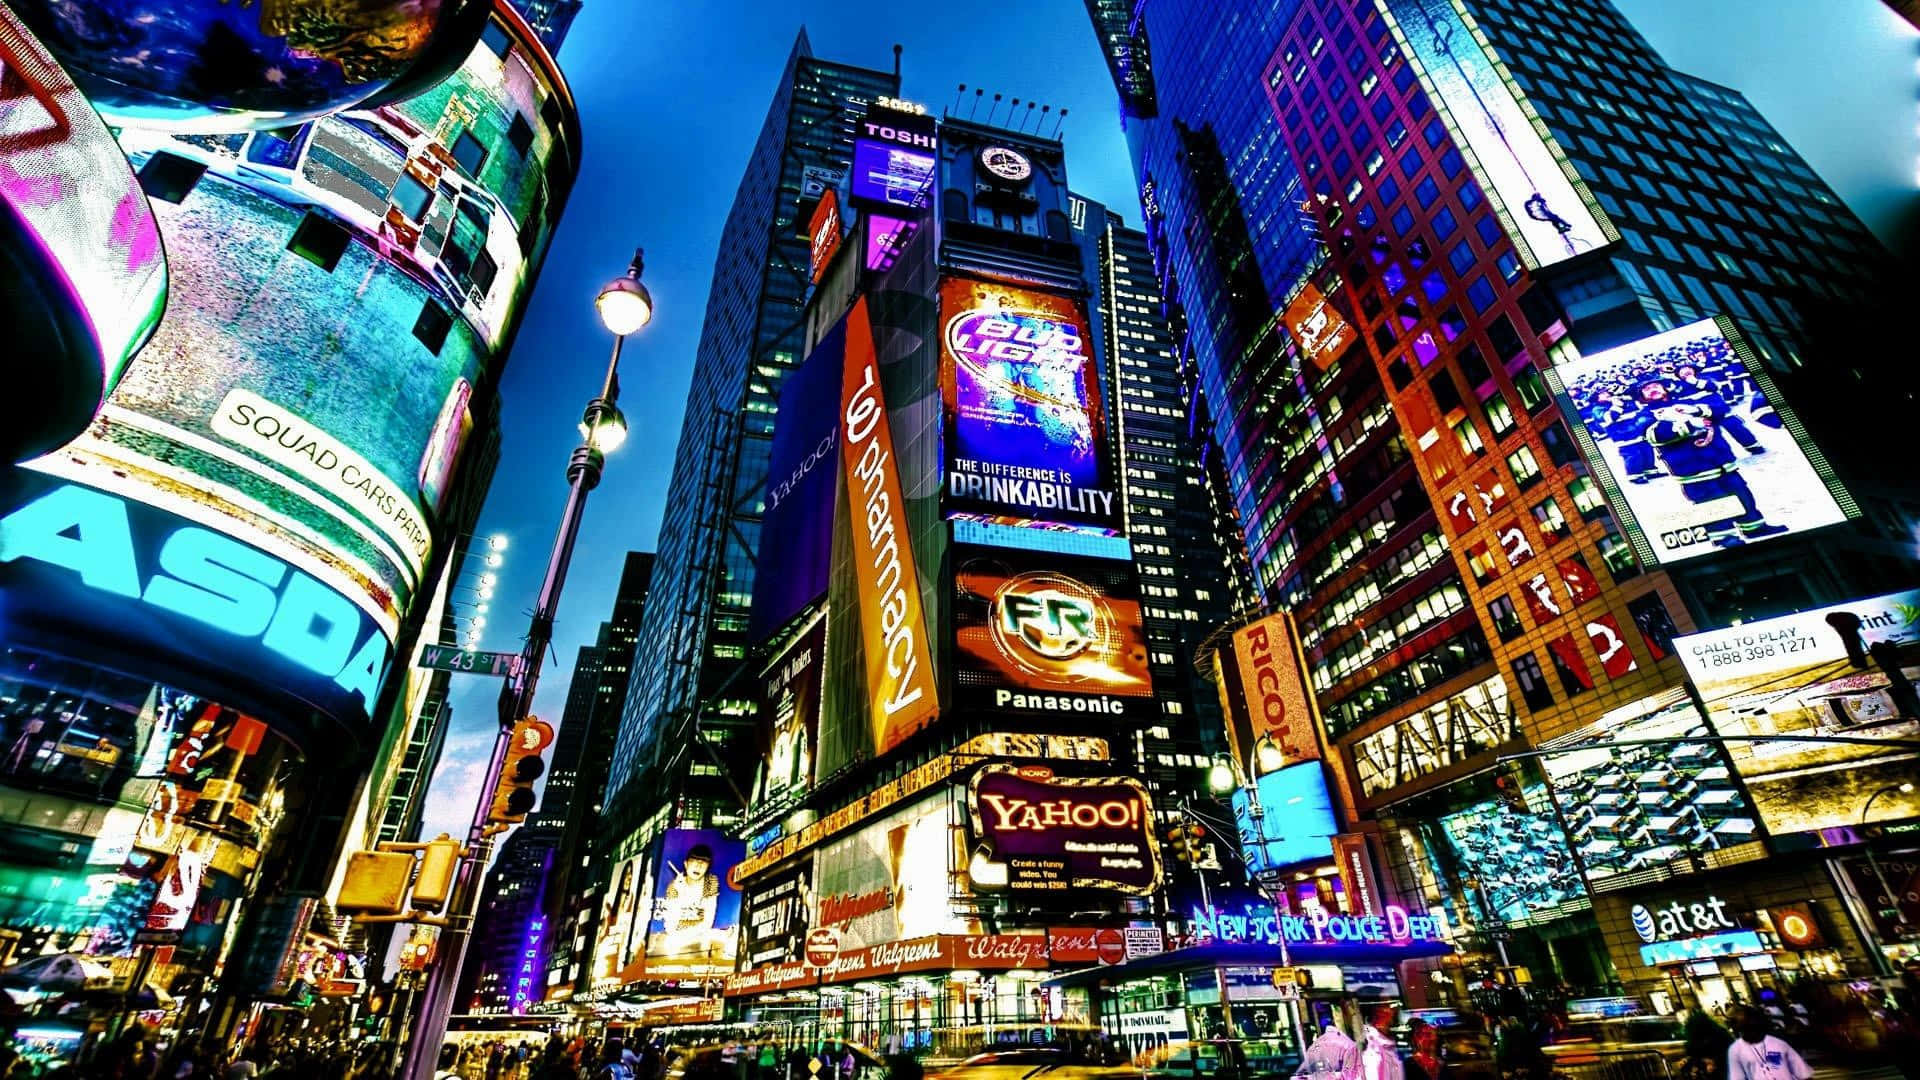 Hintergrundbildvon Times Square In Hd, New York